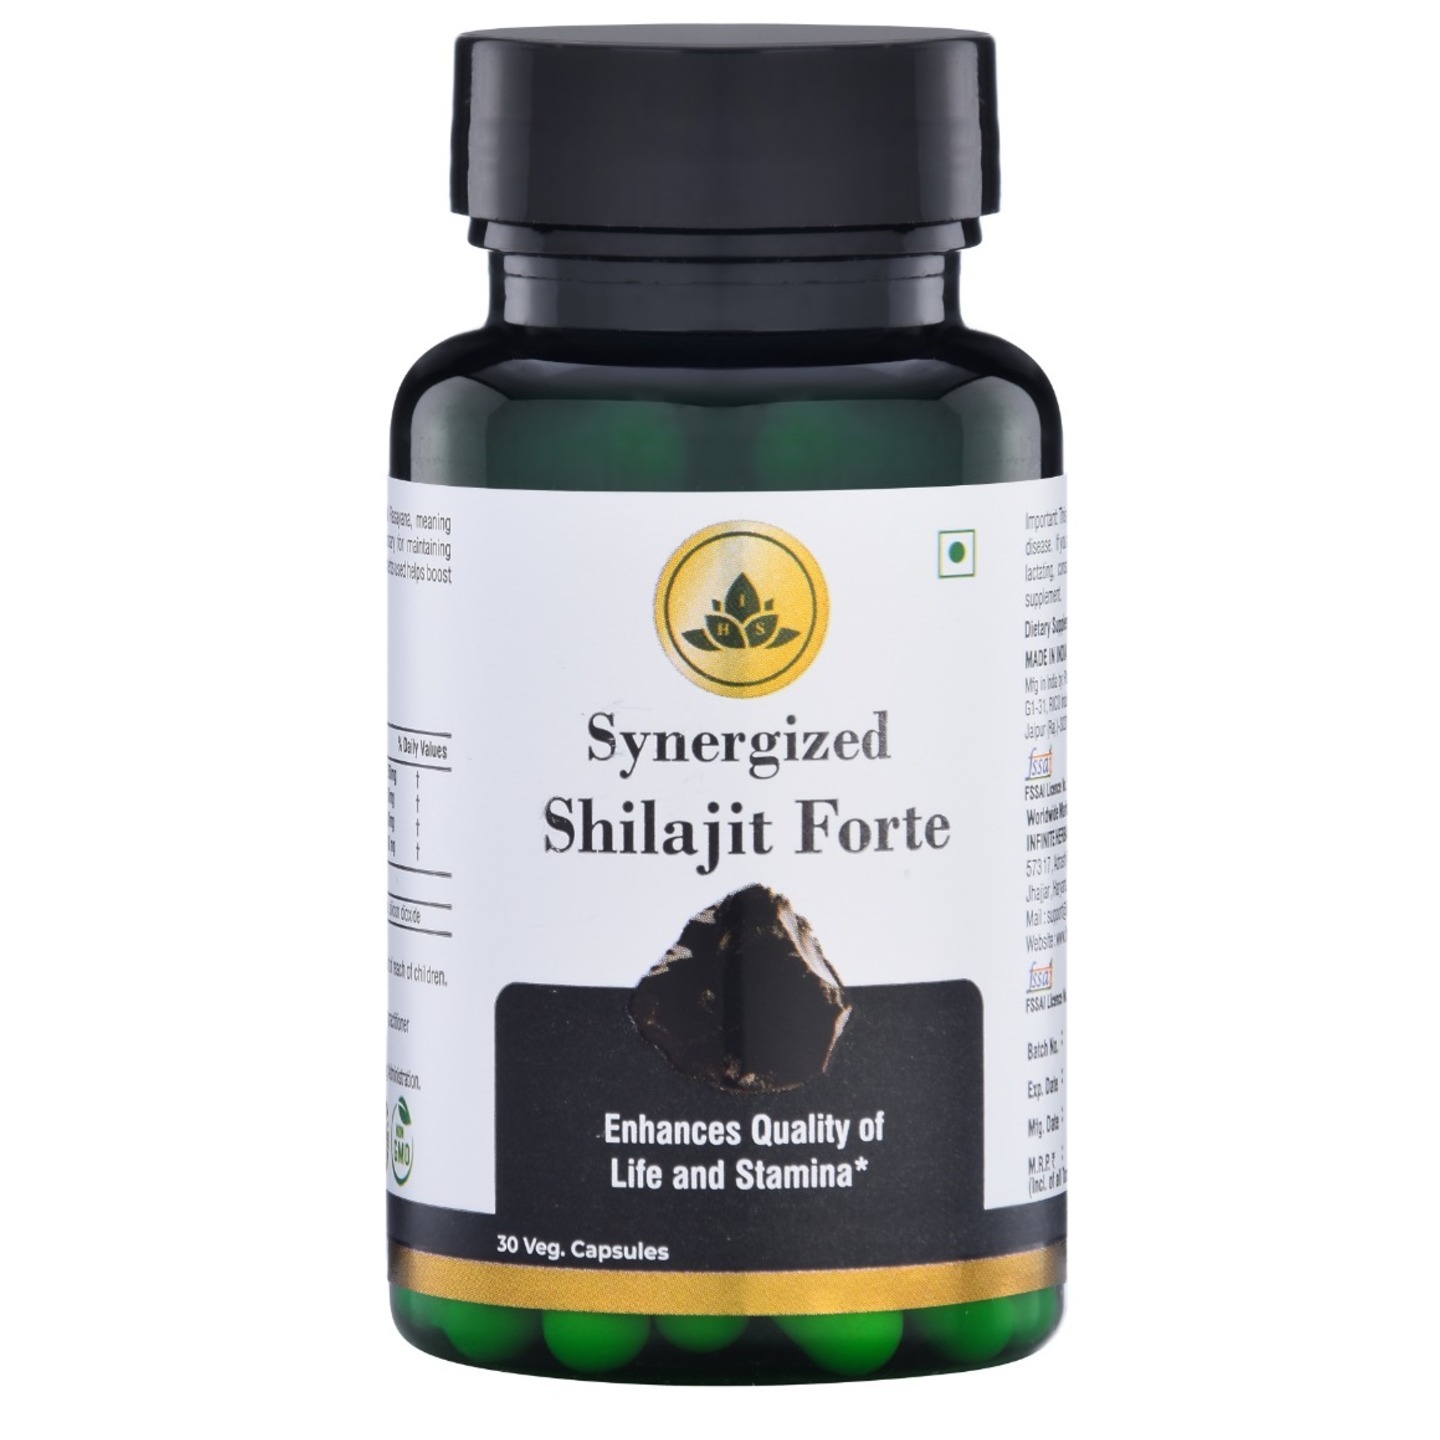 Synergized Shilajit Forte